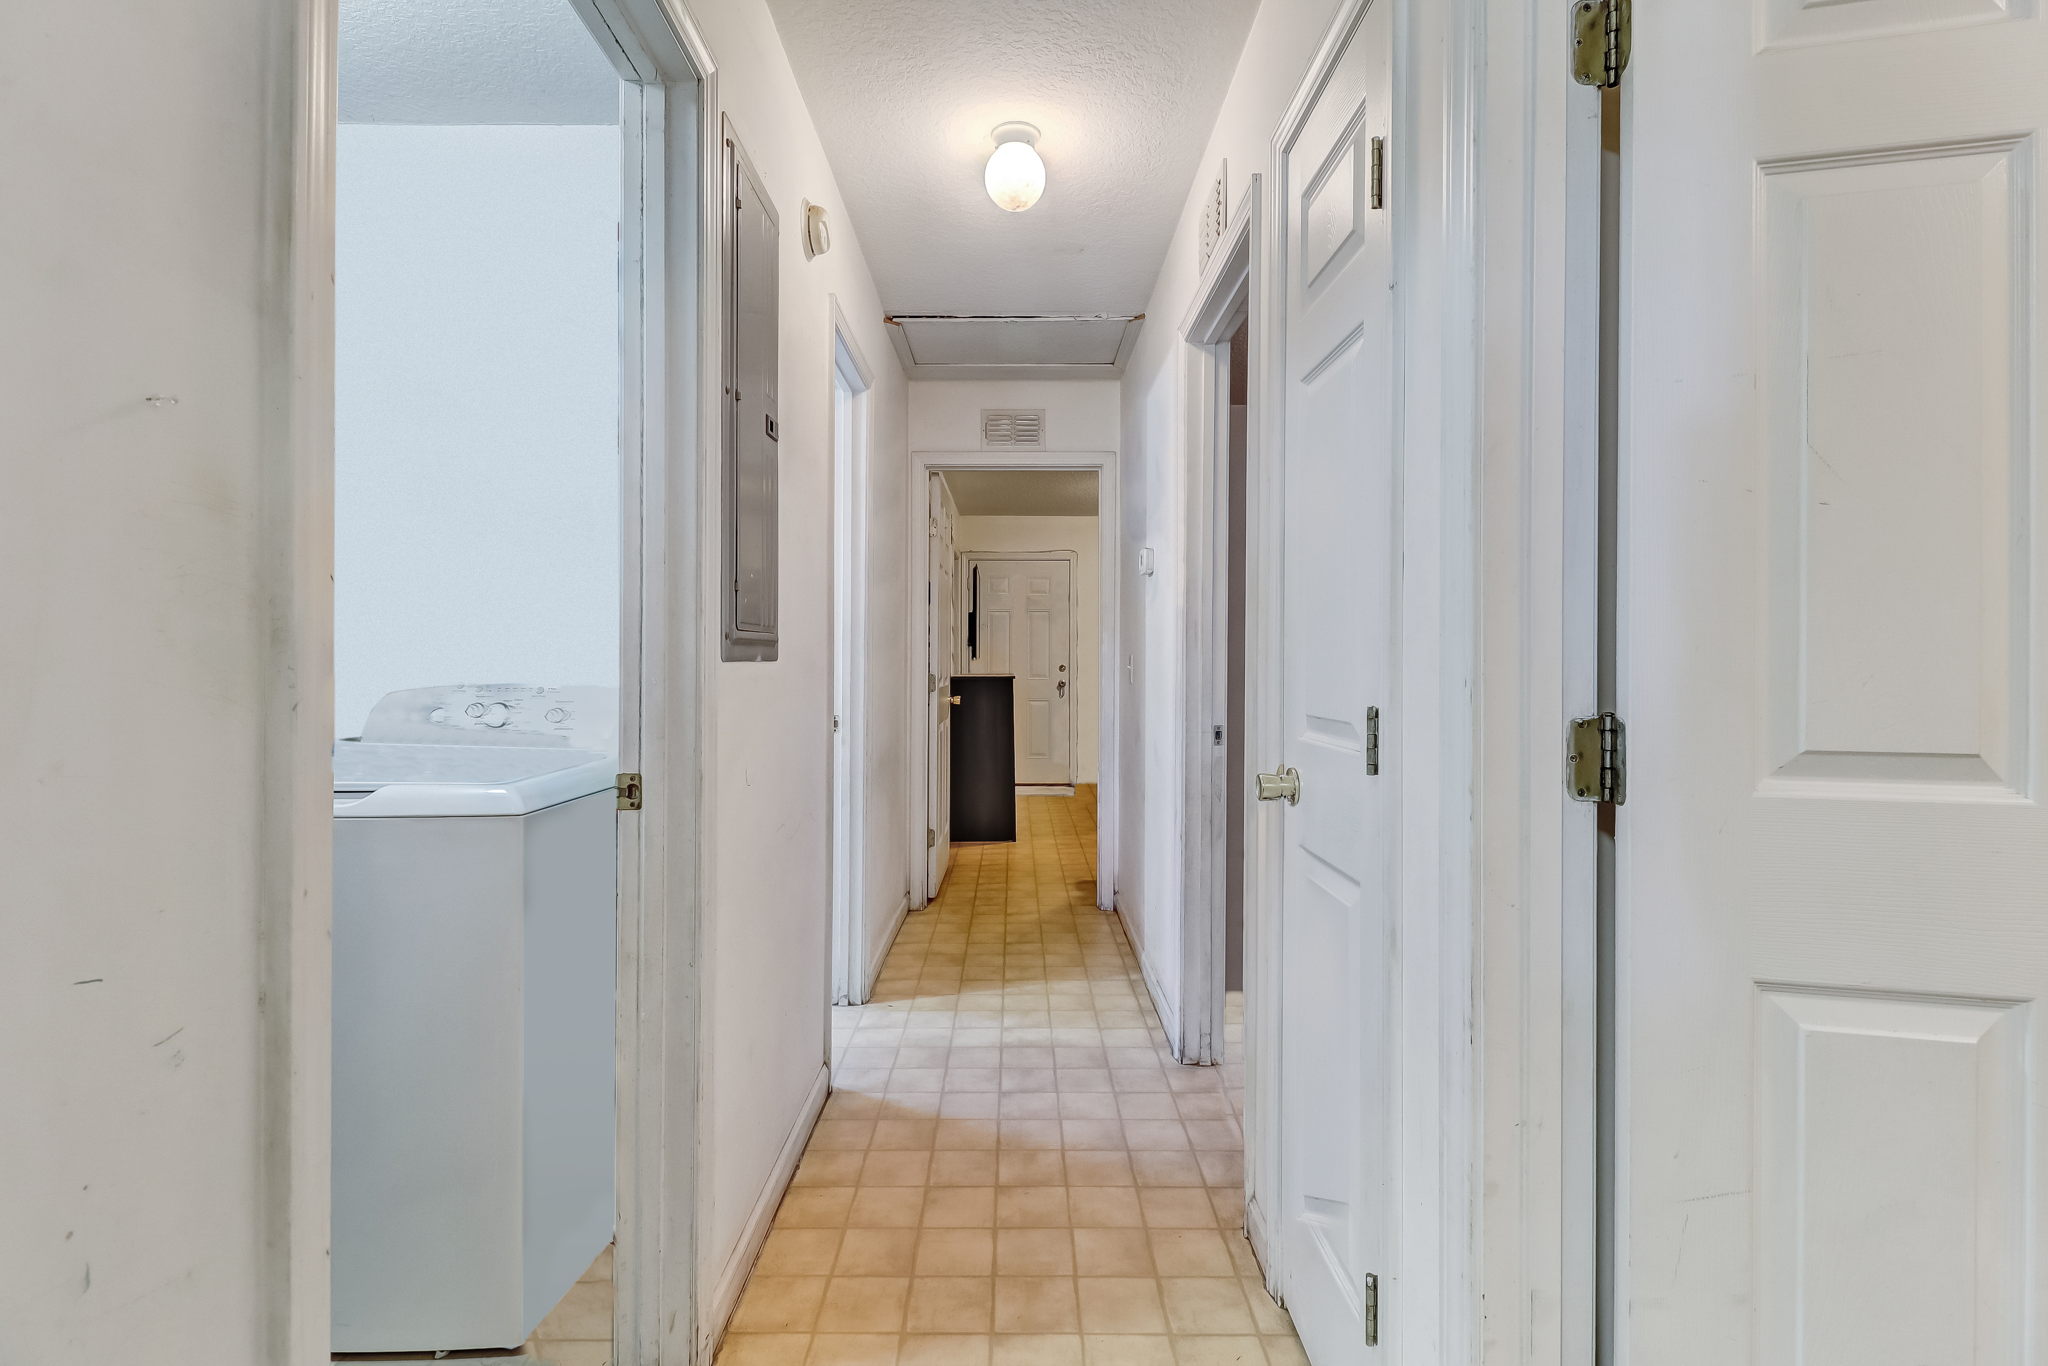 Unit 1121: hallway to bedrooms and bathrooms